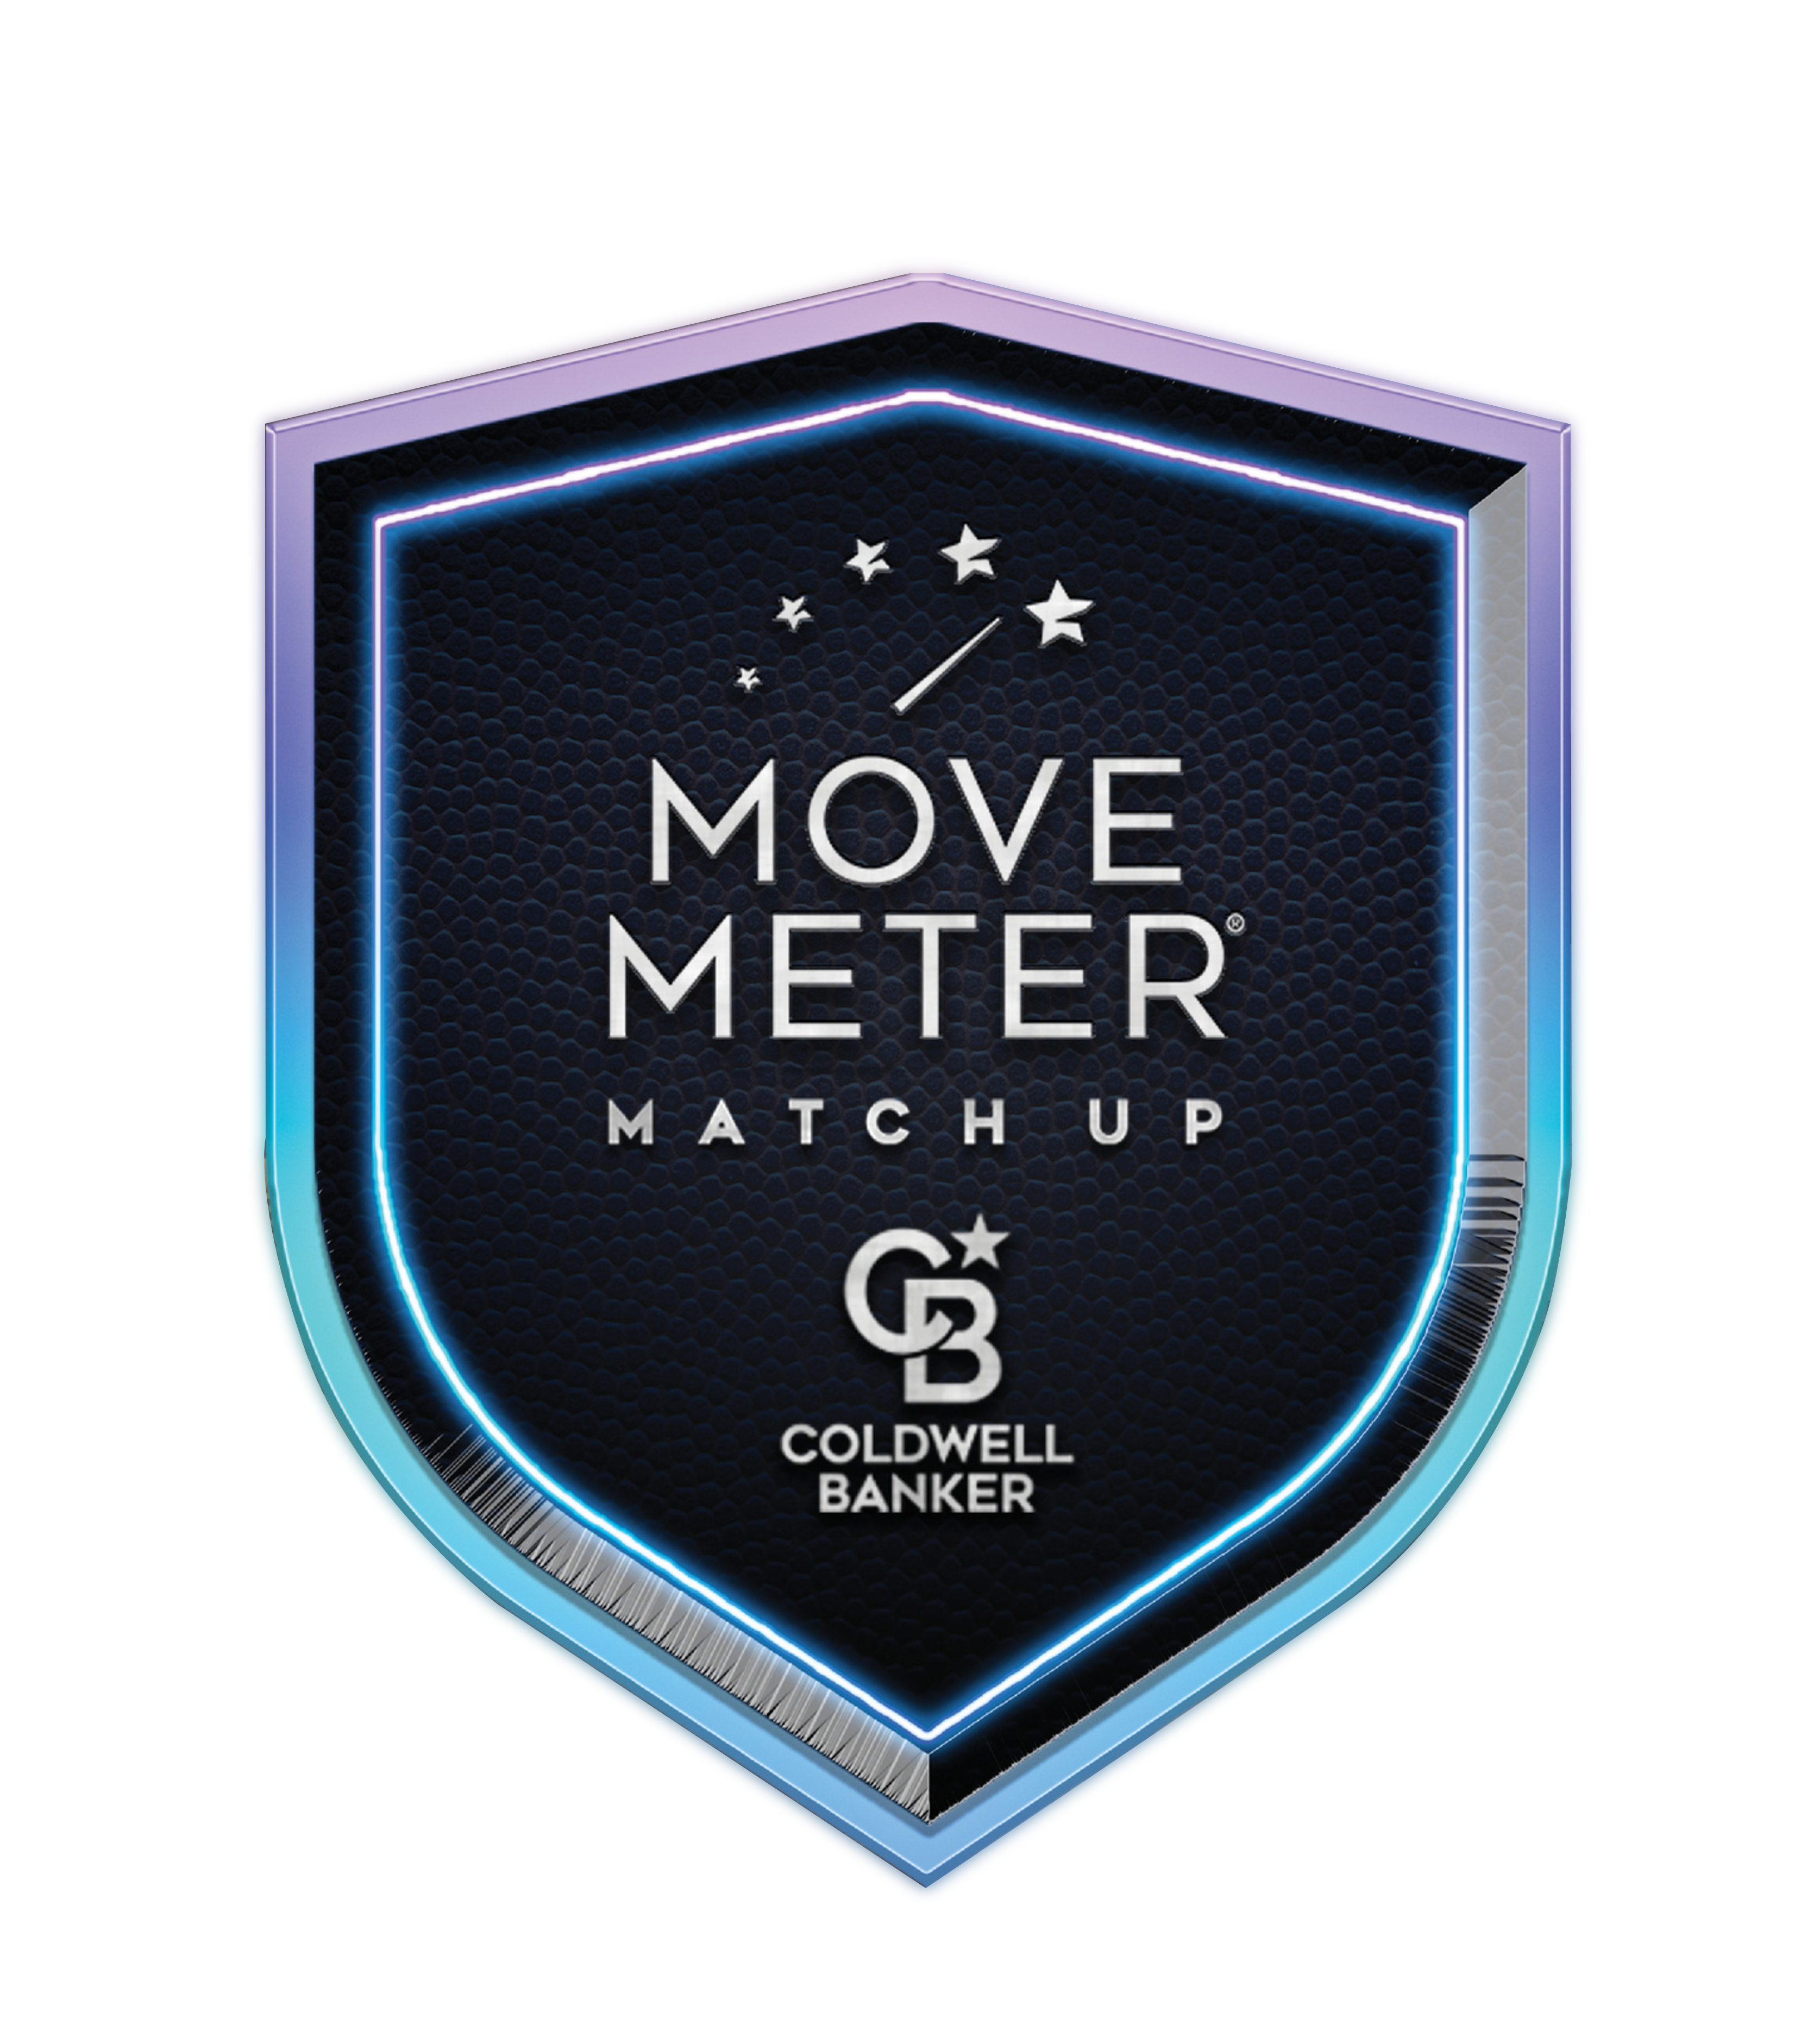 Move Meter